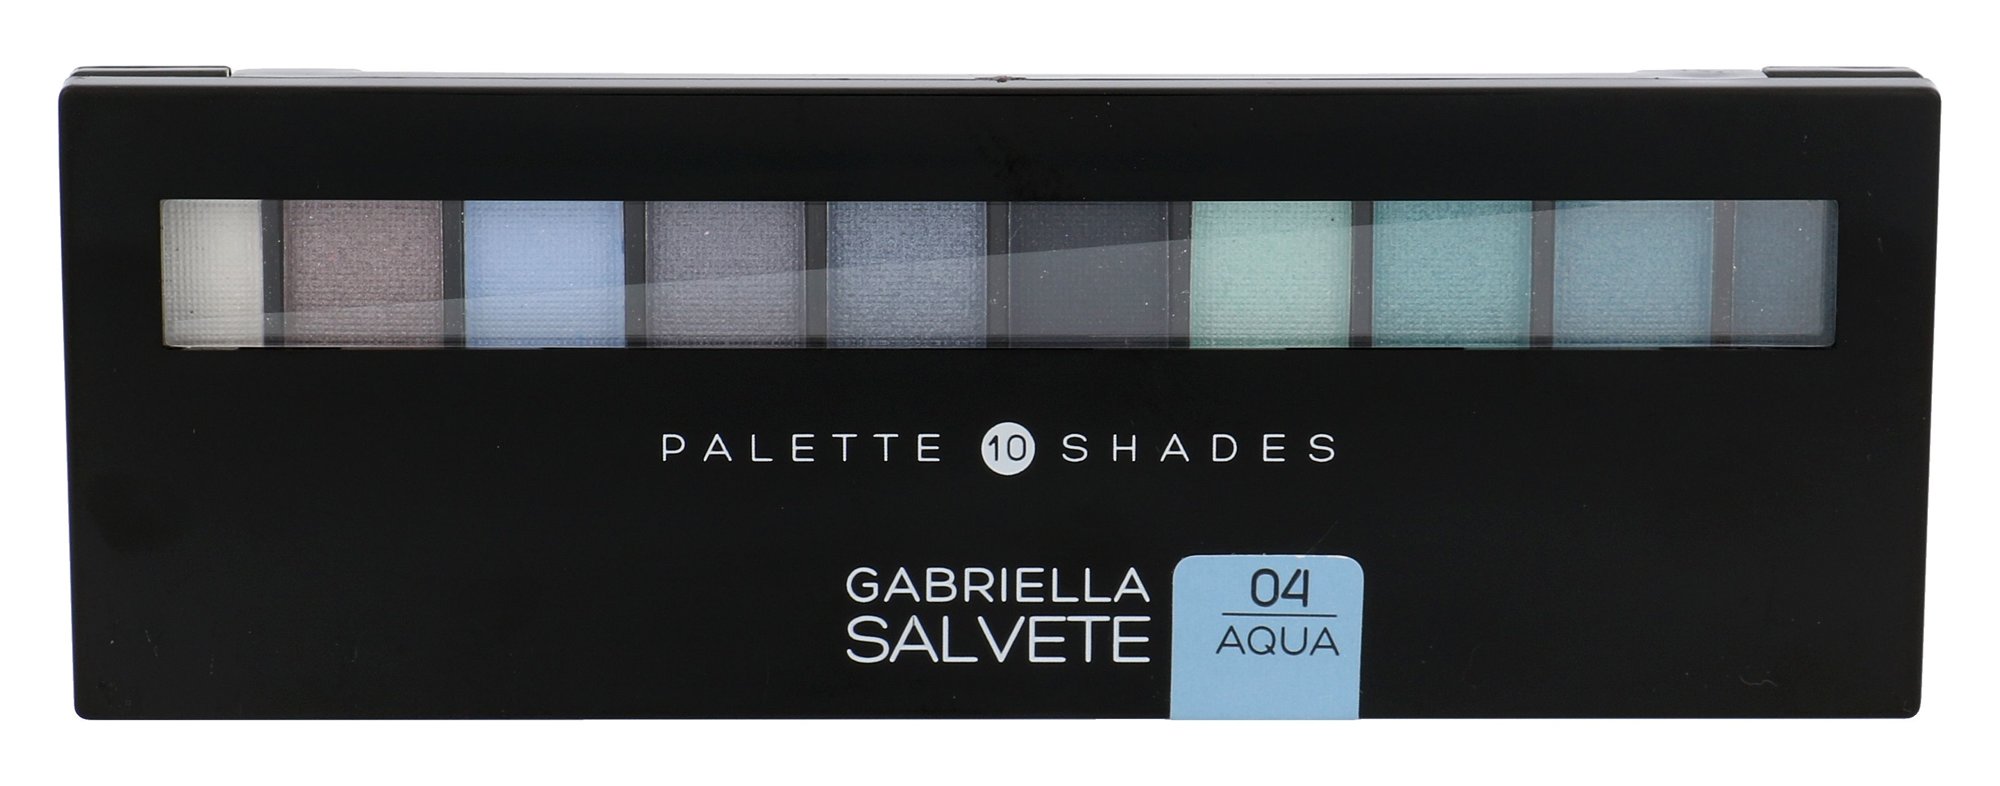 Gabriella Salvete Palette 10 Shades 12g šešėliai